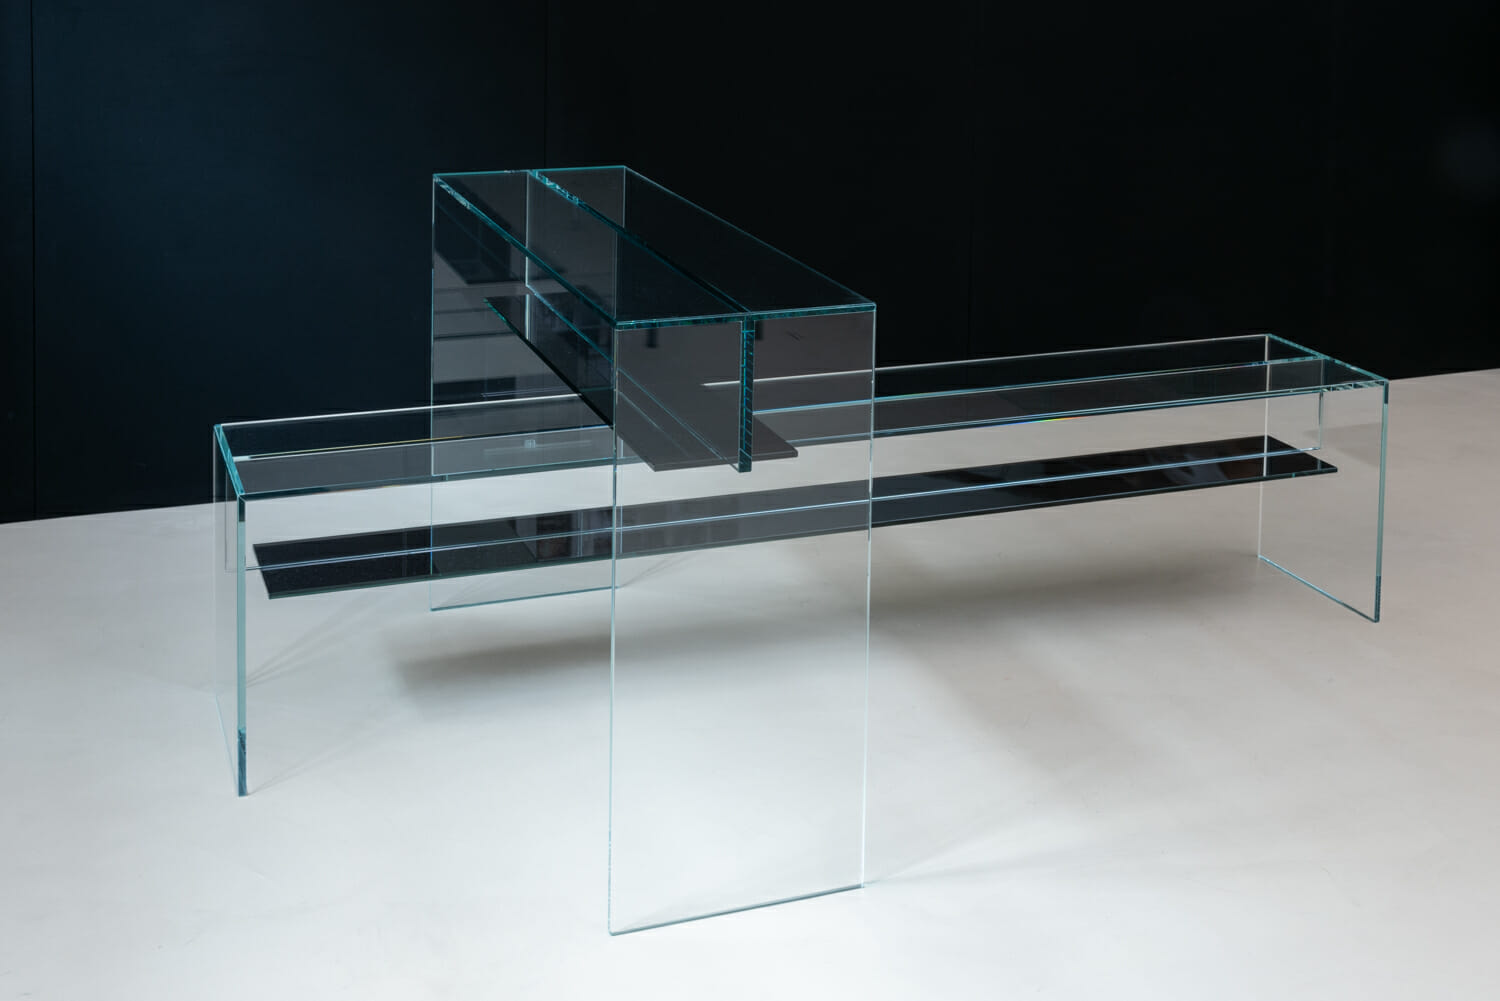 https://www.decorilla.com/online-decorating/wp-content/uploads/2019/05/high-end-glass-furniture-OONIKO-beam-collection.jpg